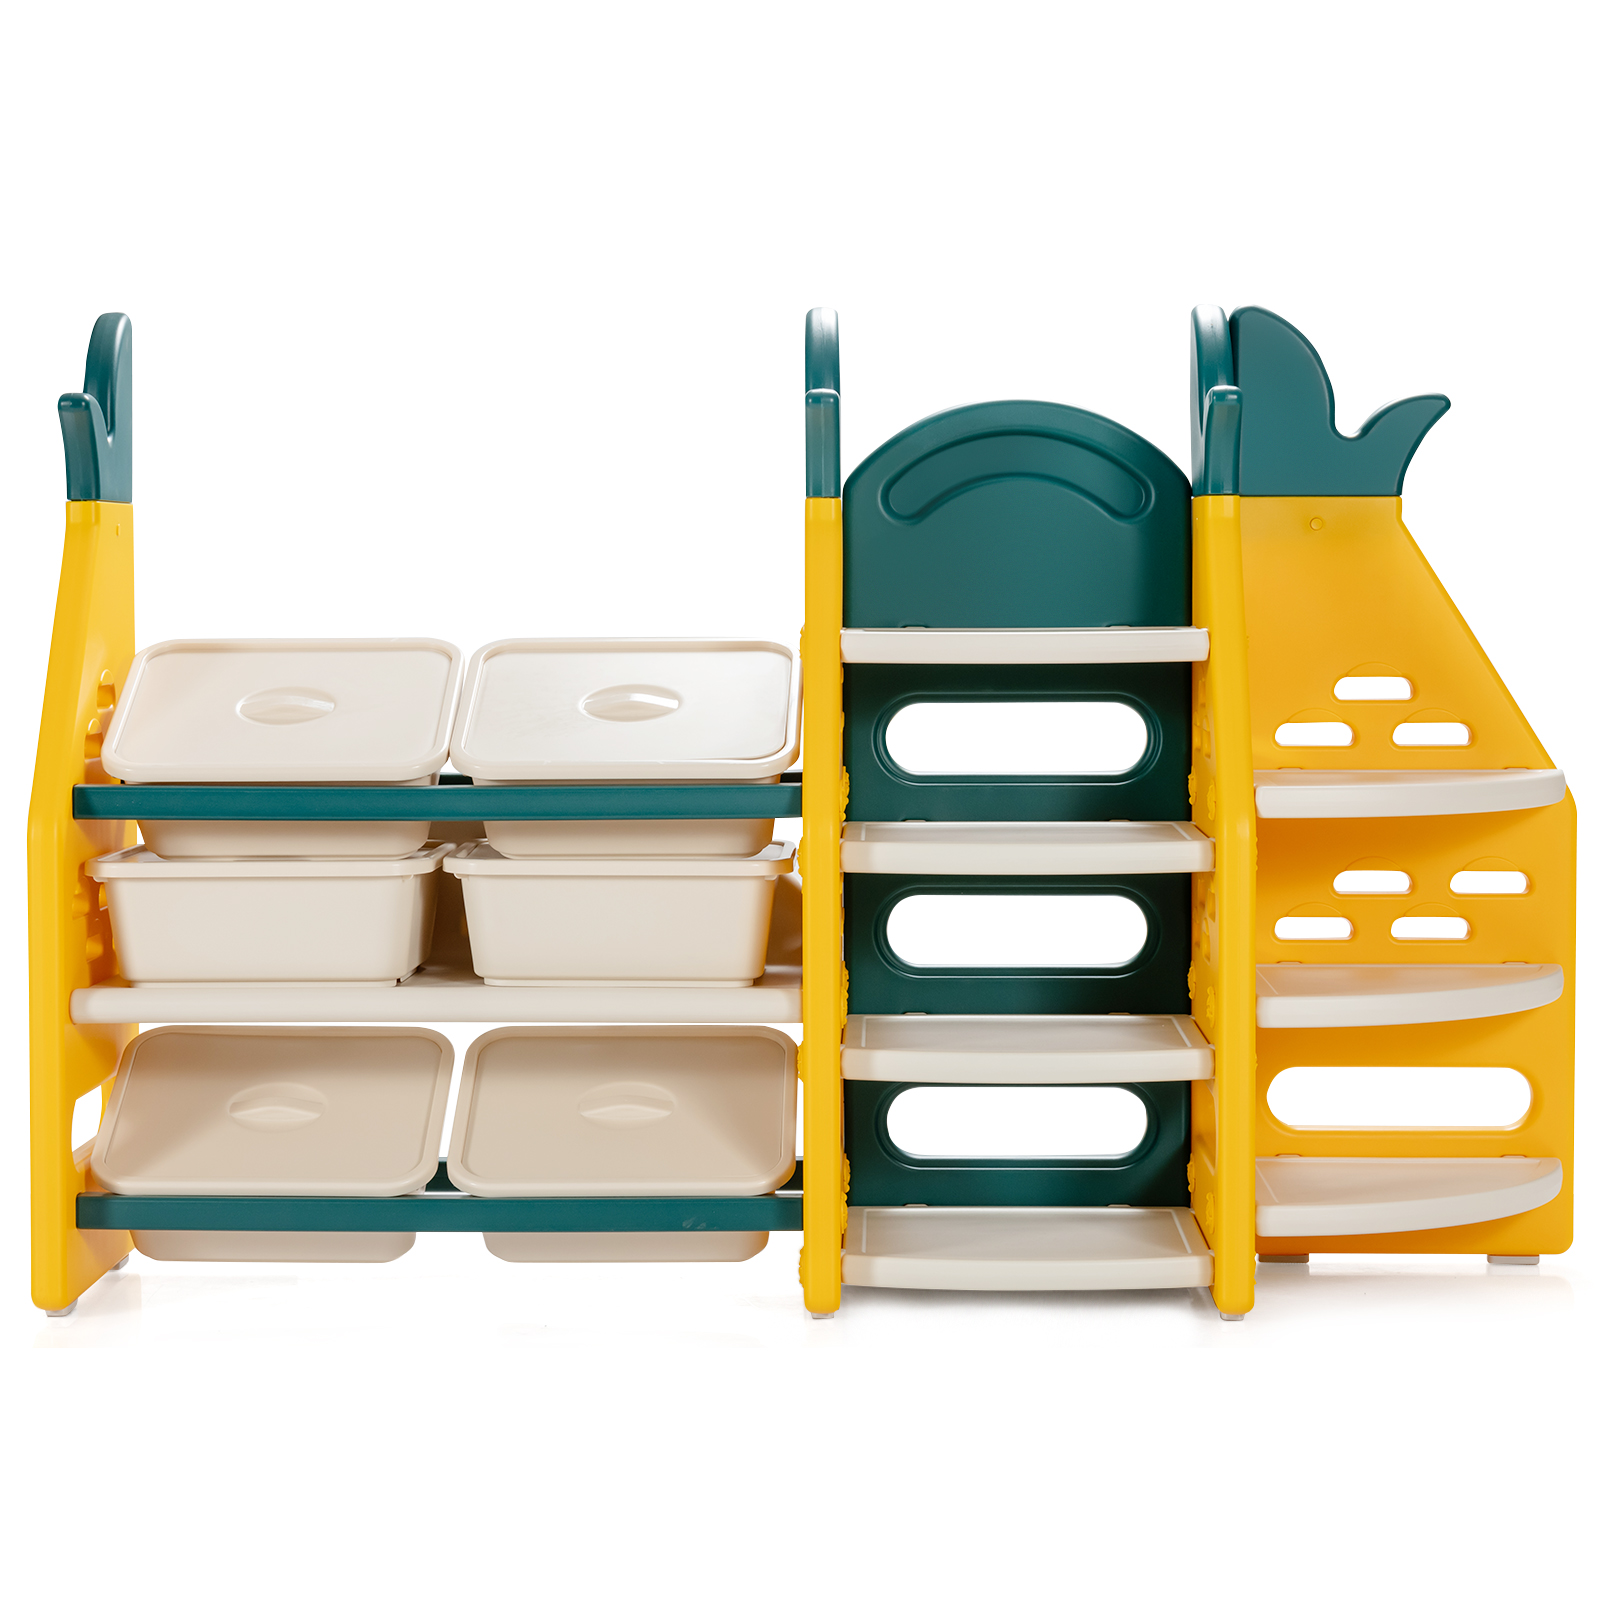 Topbuy 3-in-1 Kids Toy Storage Rack Pineapple Toy Organizer Storage Cabinet w/Plastic Bins & Shelves